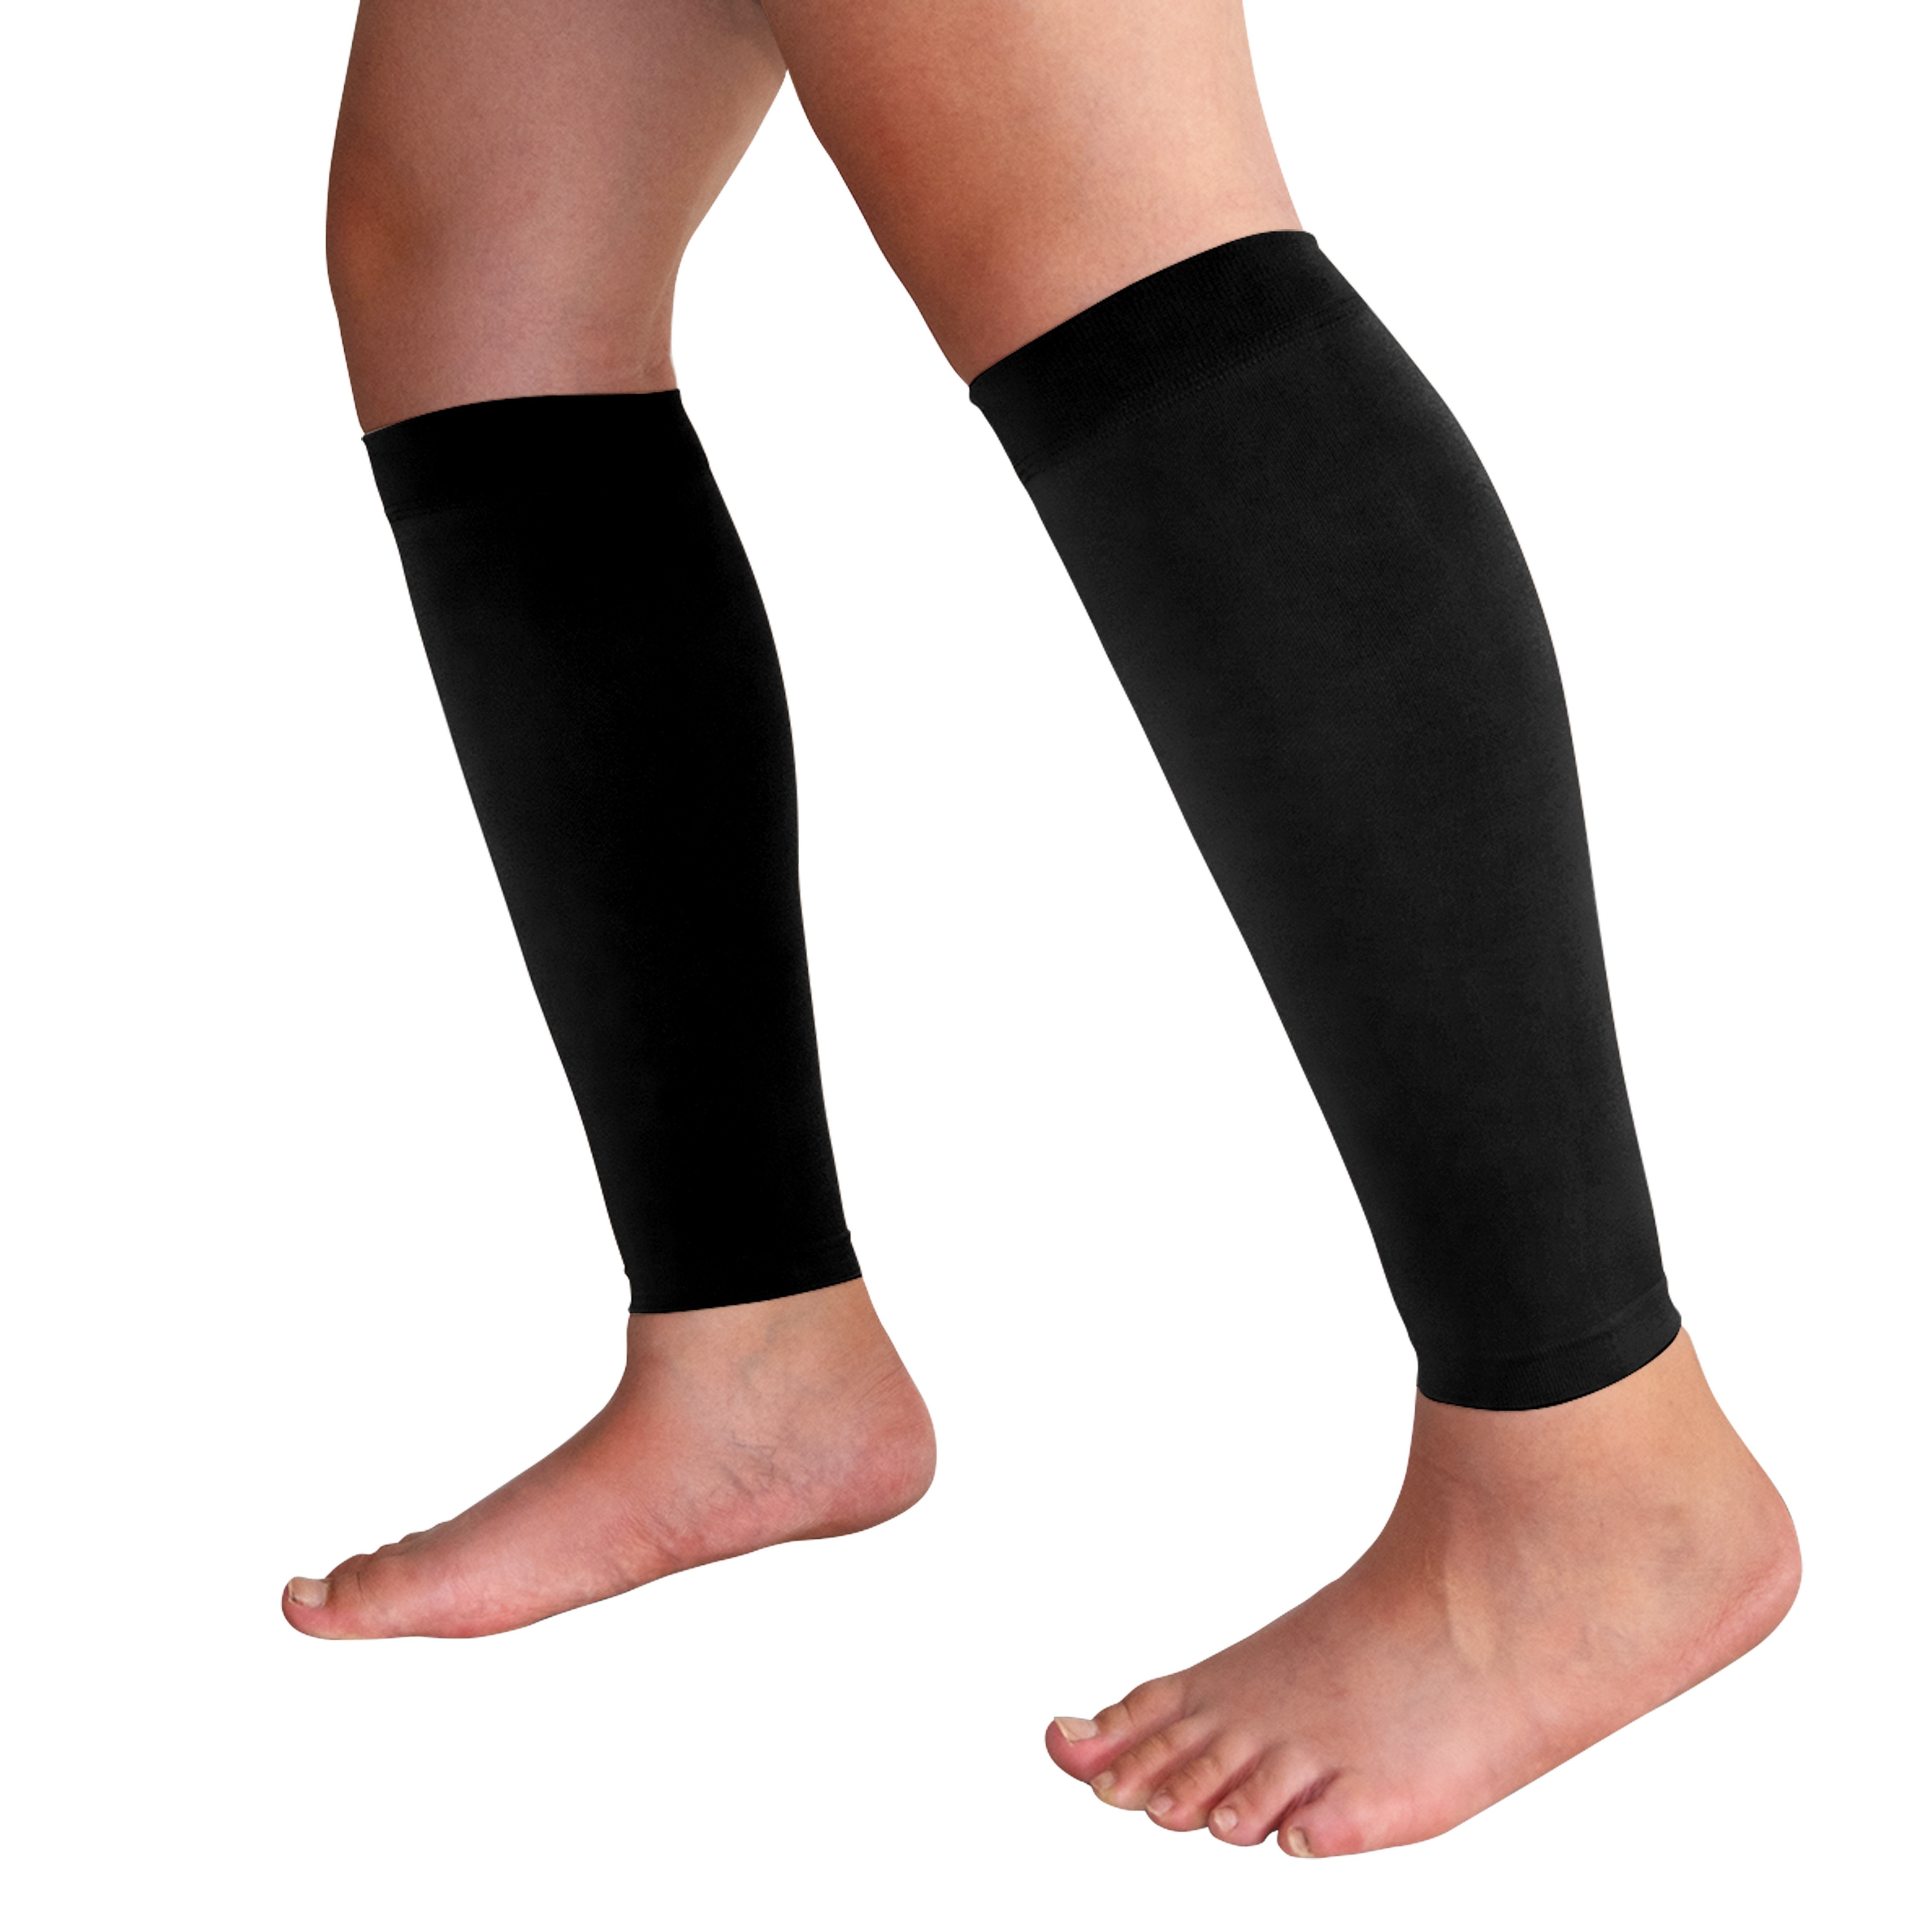 Footless Compression Socks 20-30mmhg for Leg Support, Shin Splint